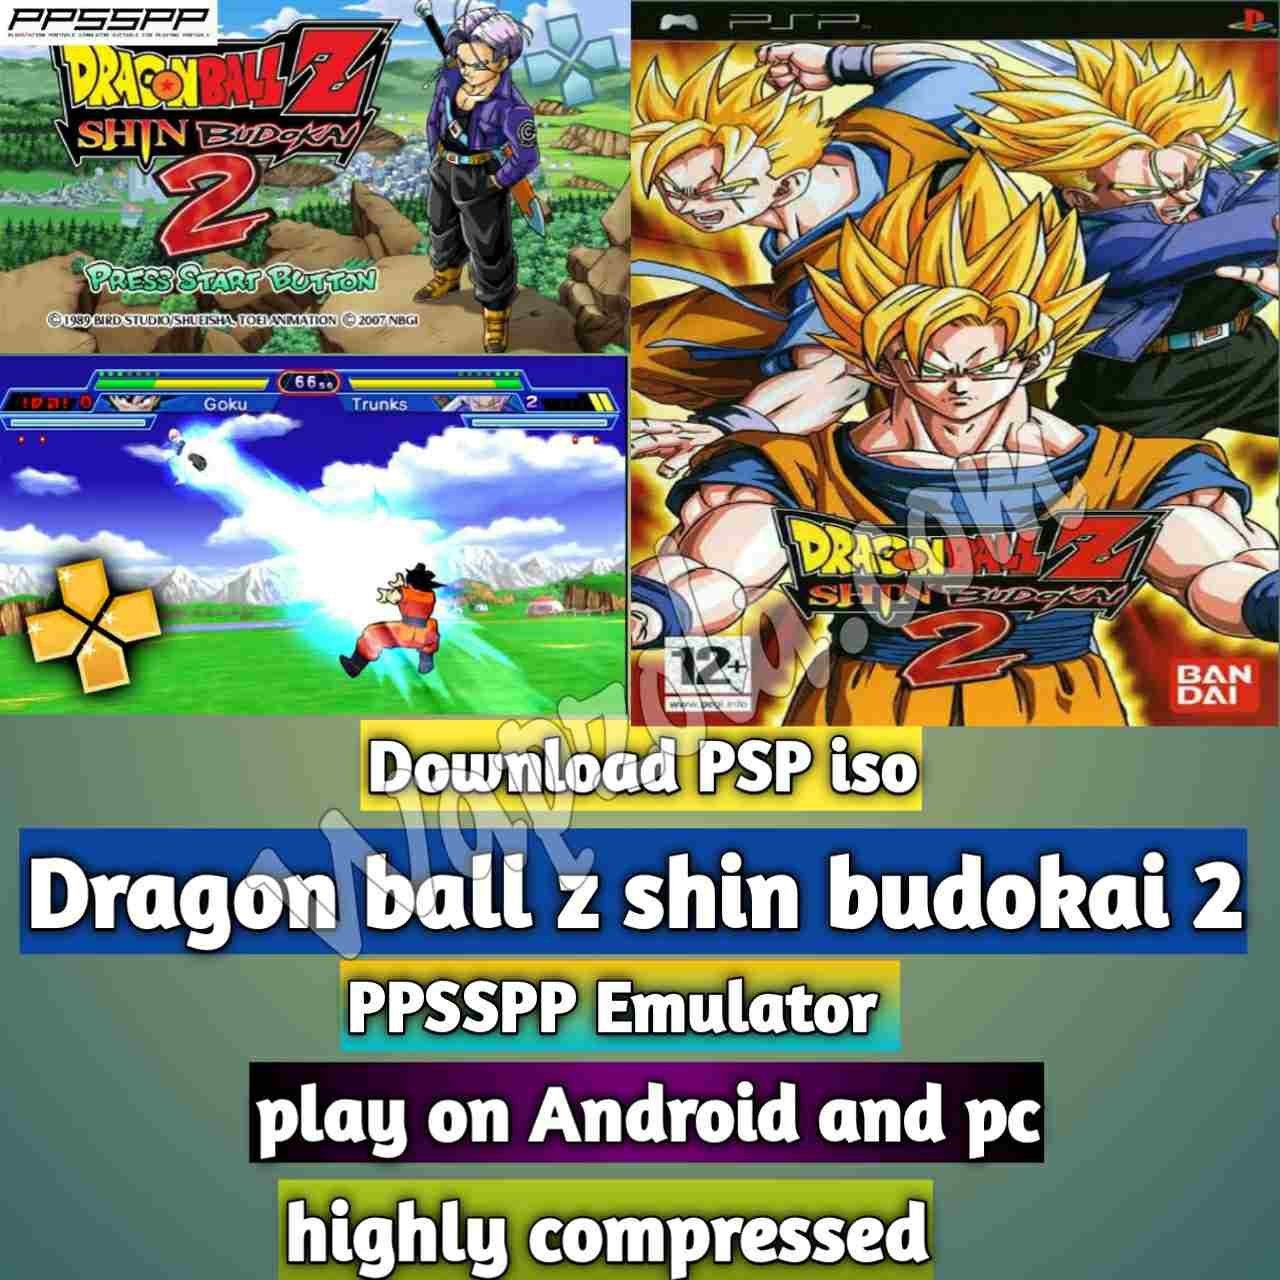 [Download] Dragon ball z shin budokai 2 iso ppsspp emulator – PSP APK Iso ROM altamente comprimido 300MB 6